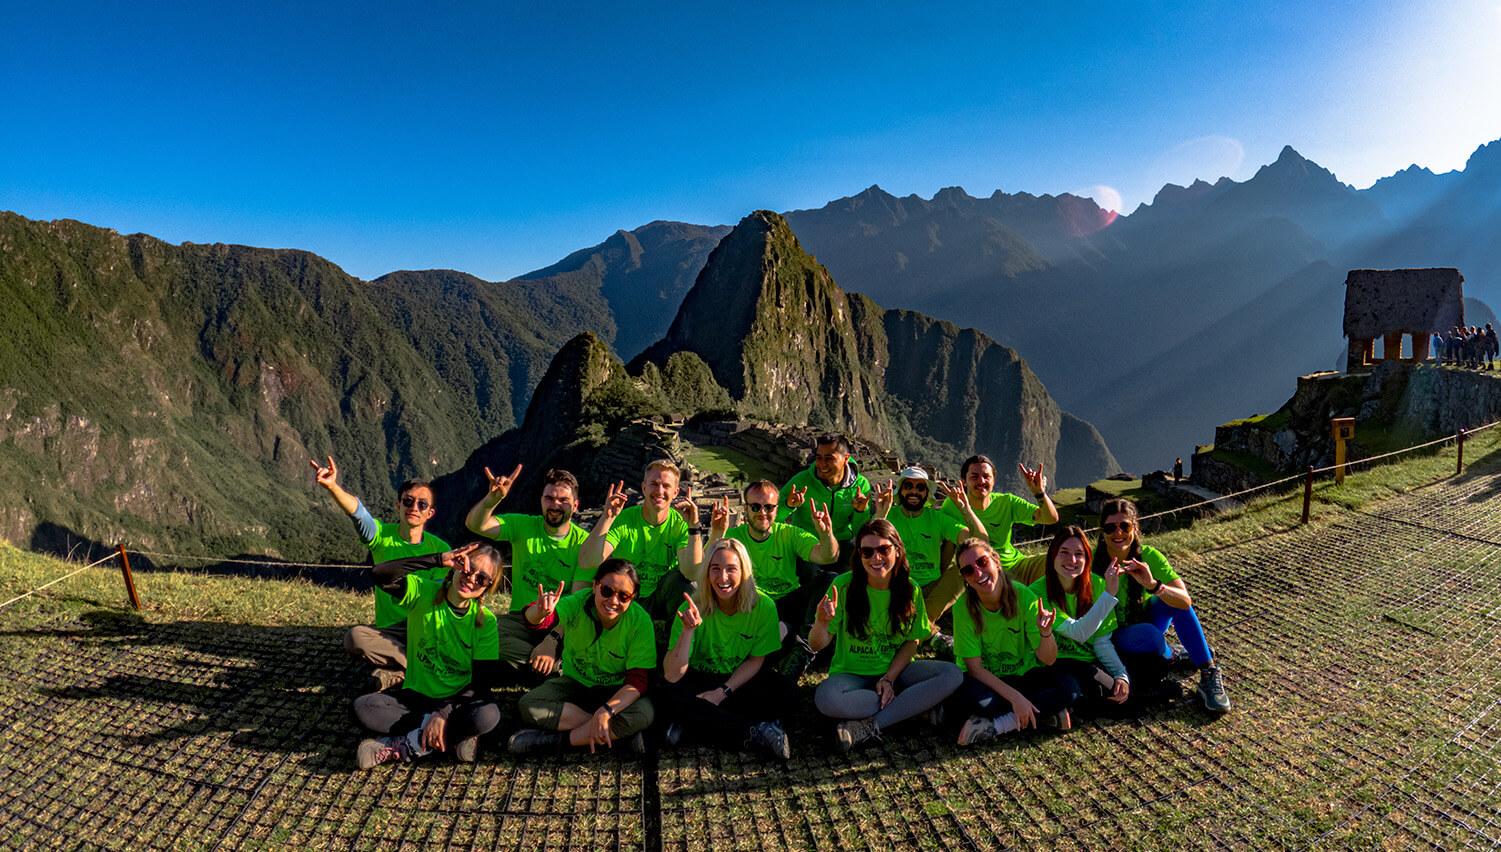 Inca Trail Availability & Permits